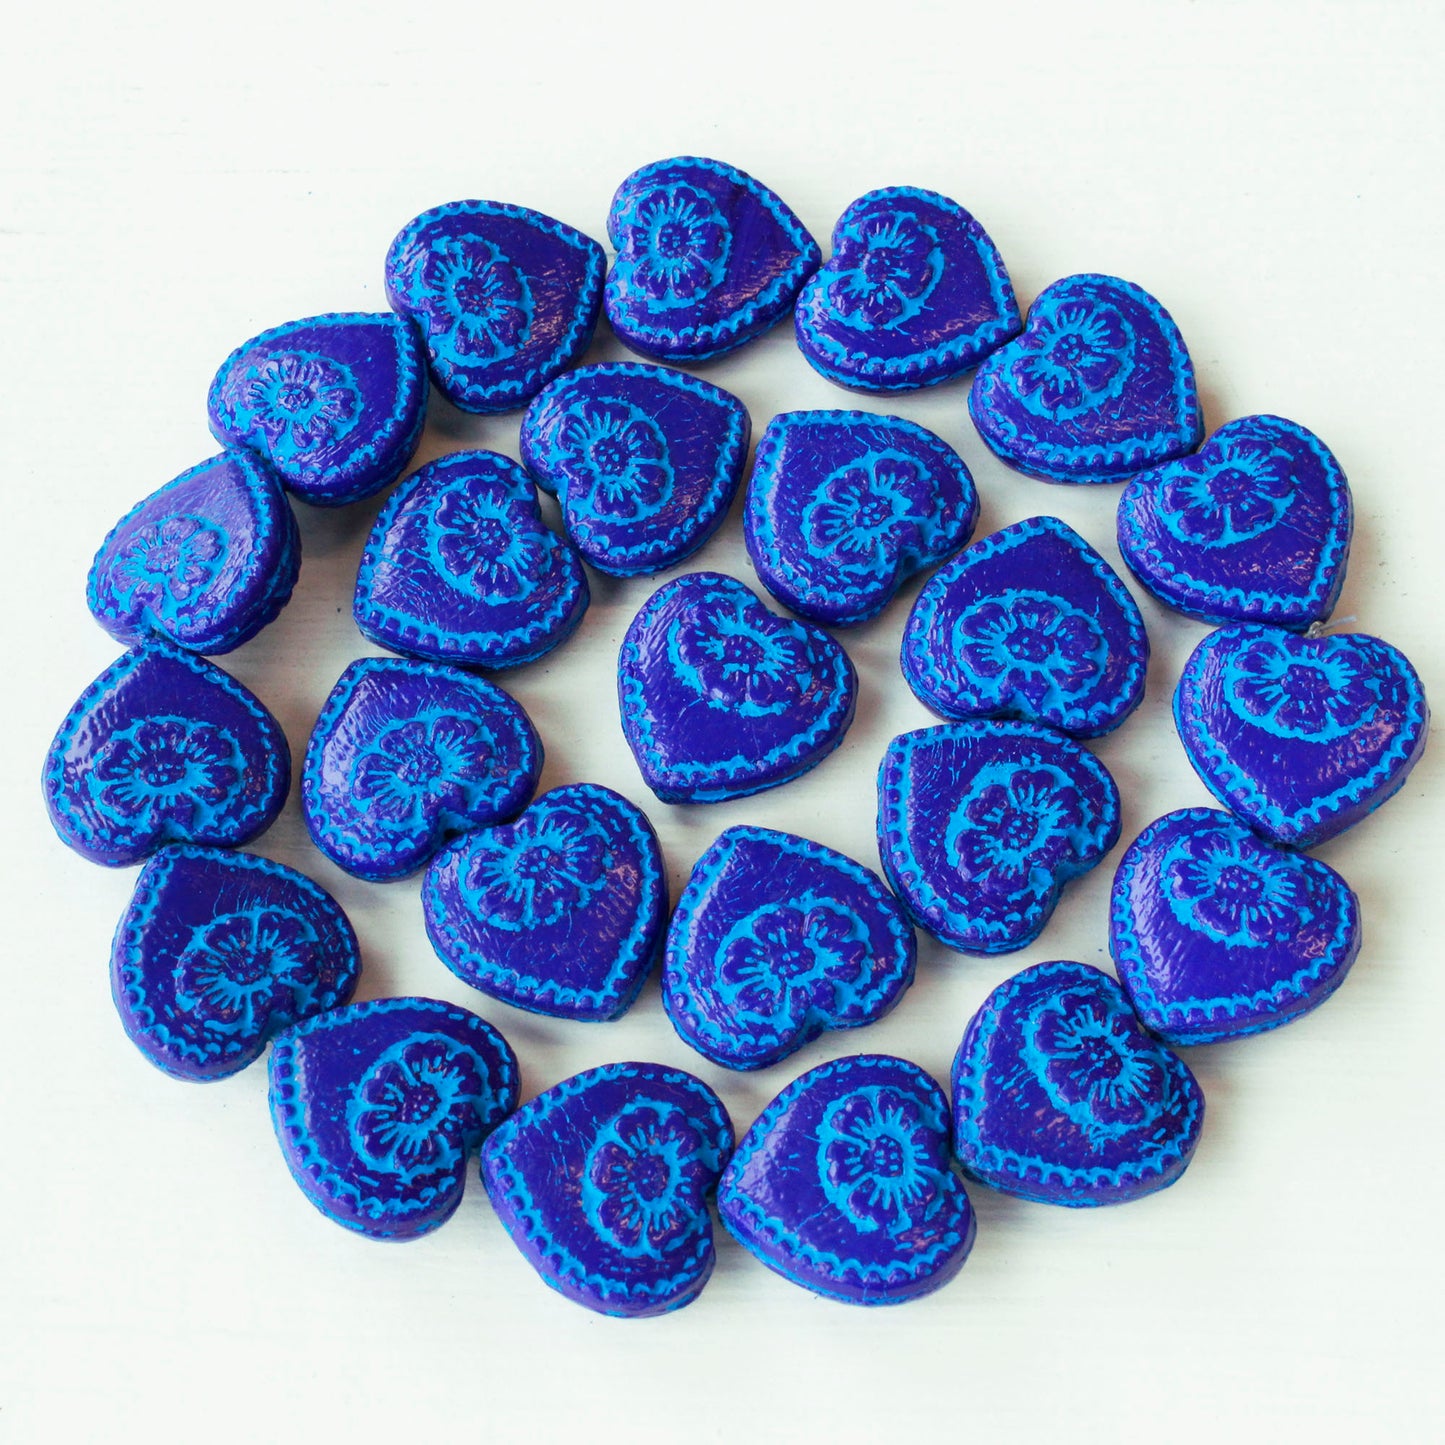 17mm Glass Heart Beads - Blue with Aqua Wash - 15